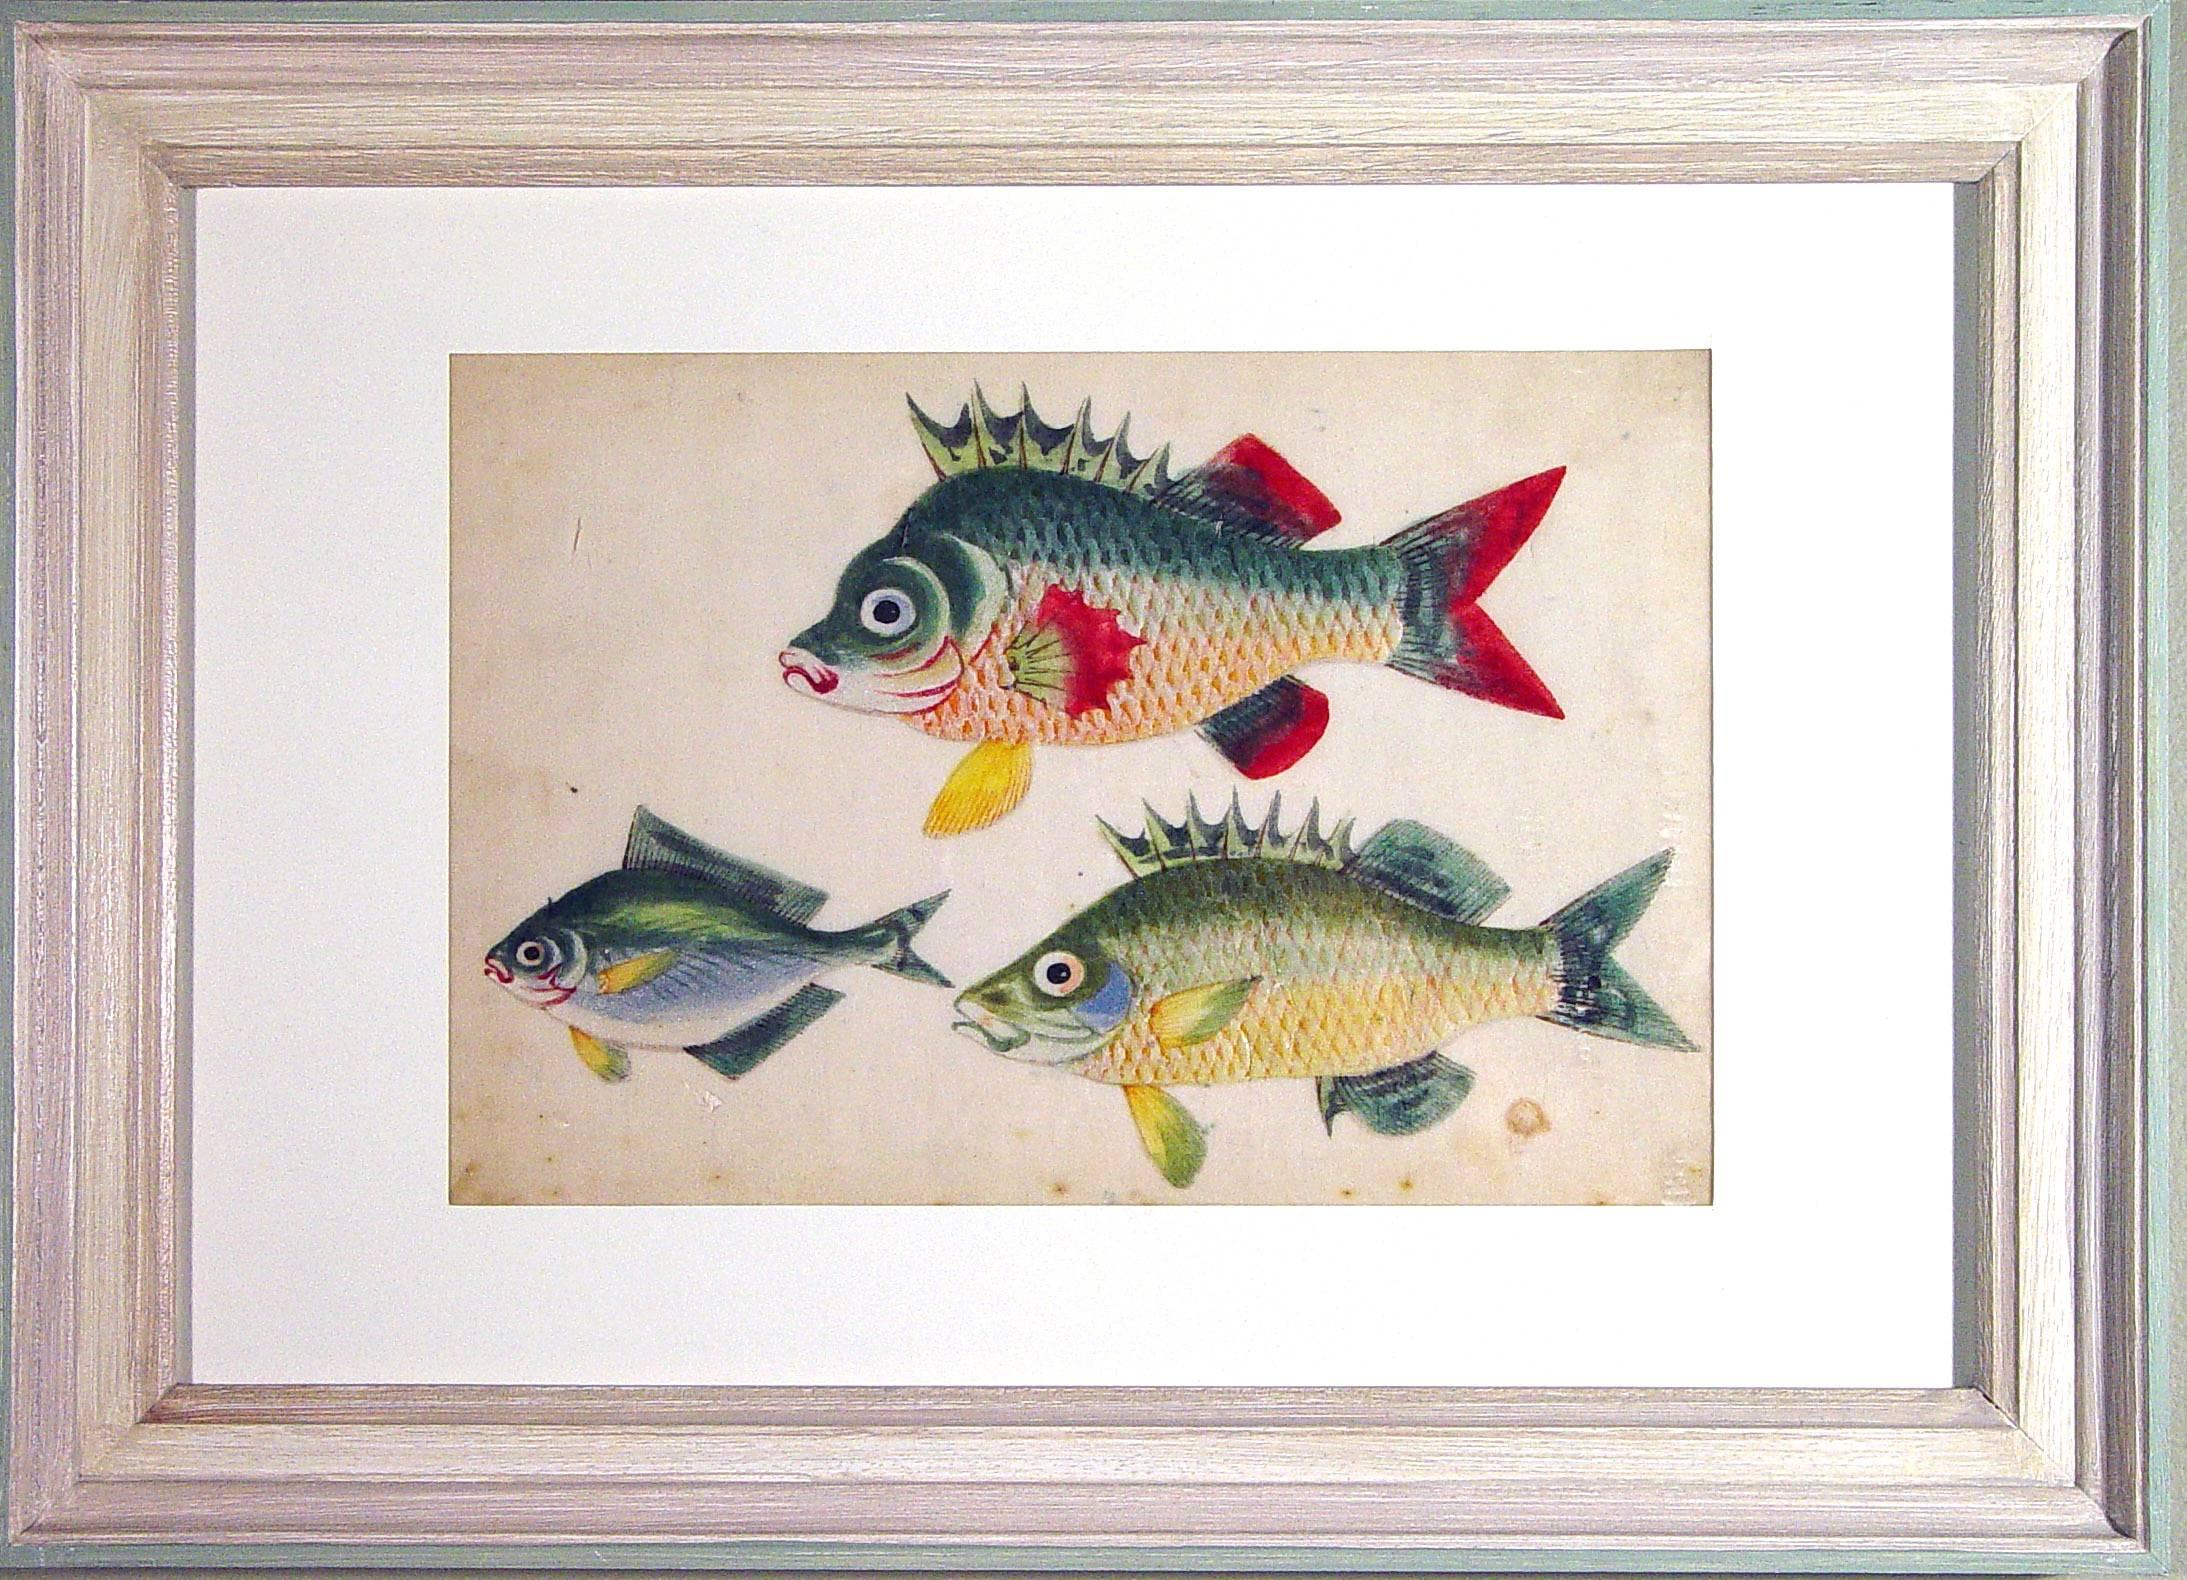 19th Century China Trade Watercolors of Fish on Pith Paper, circa 1850